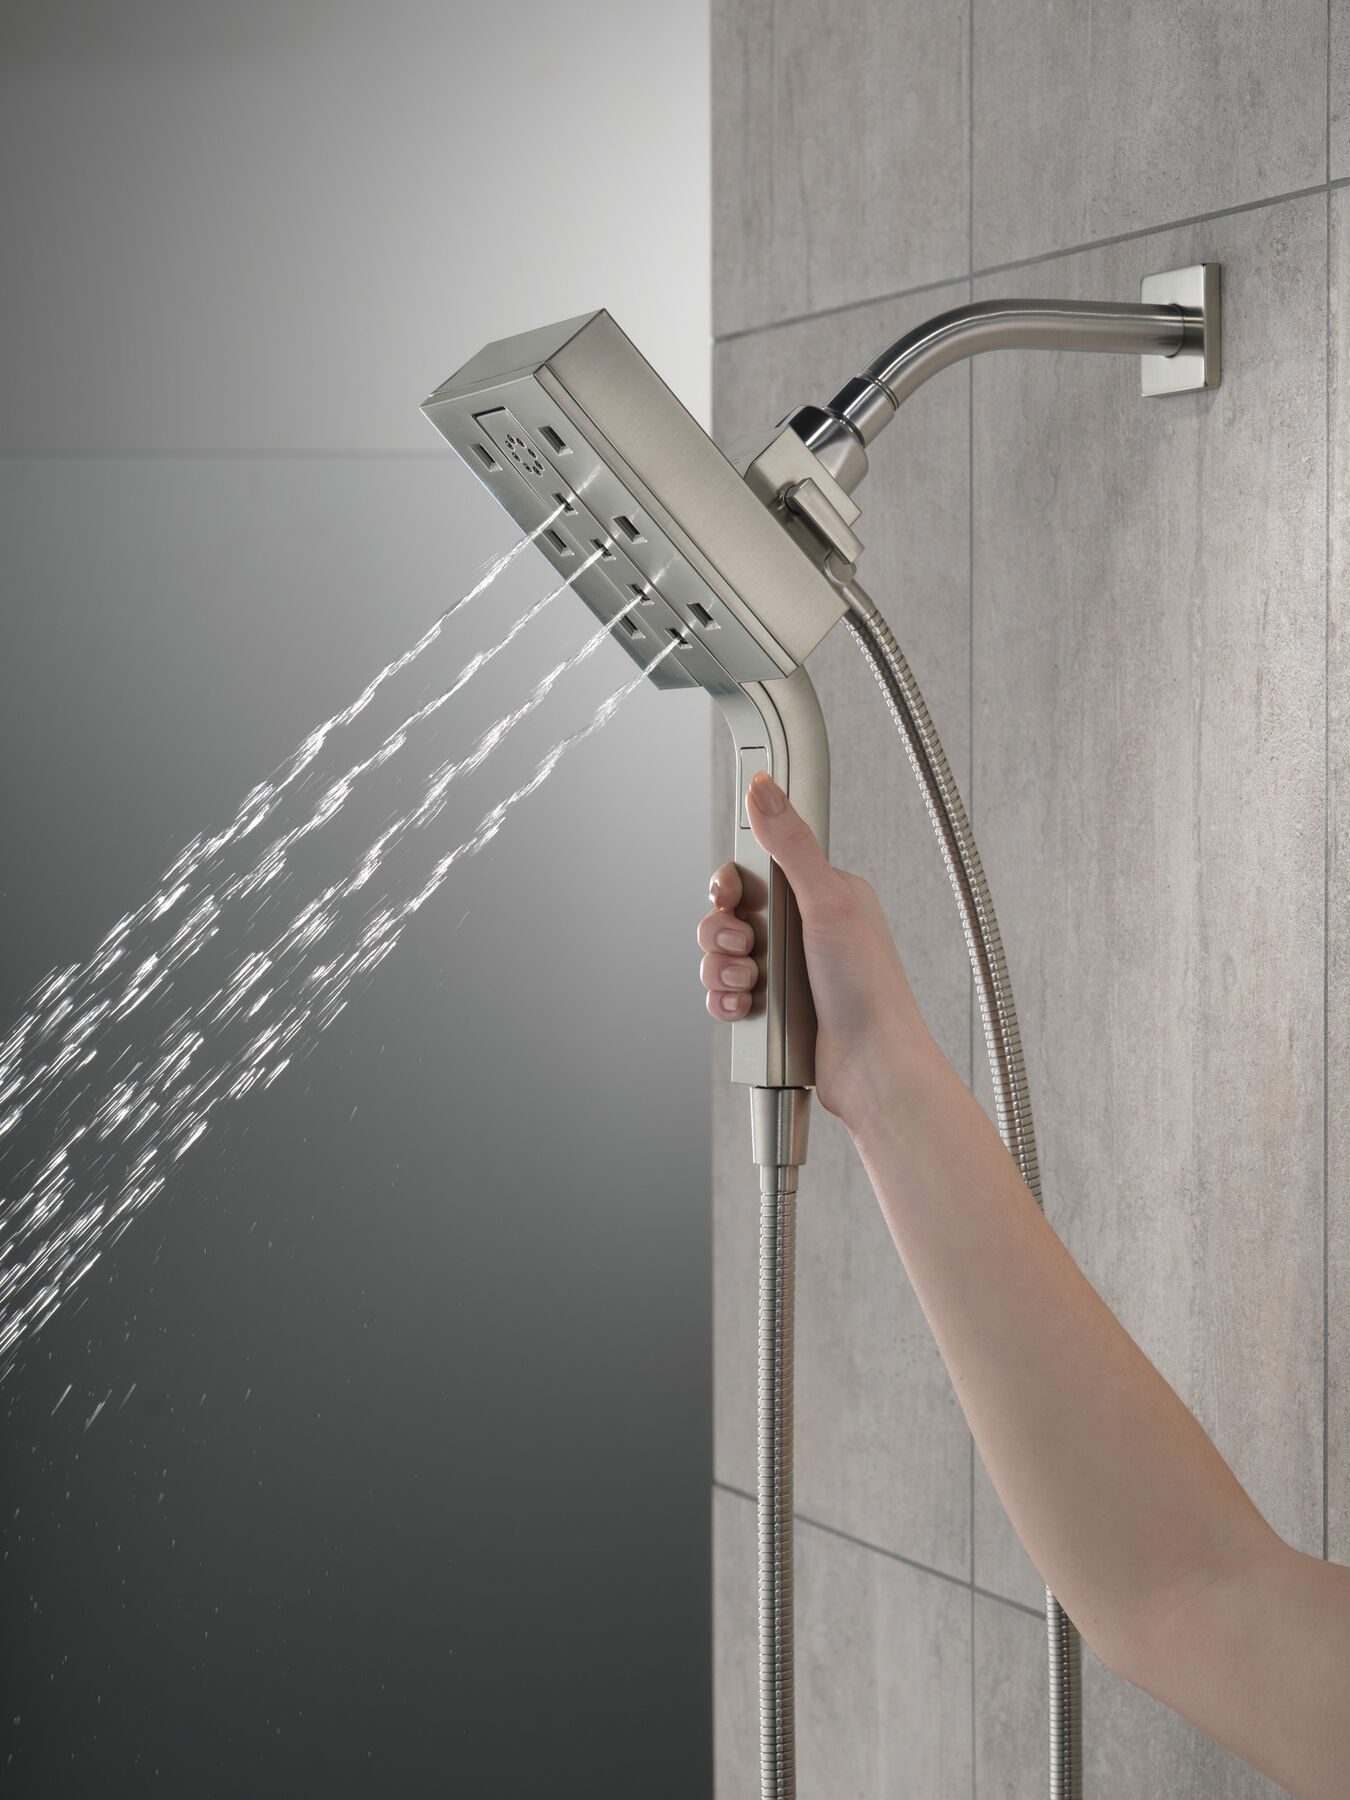 Multi-functional Pet Shower Head Drains Strainer Bath Hose Sink